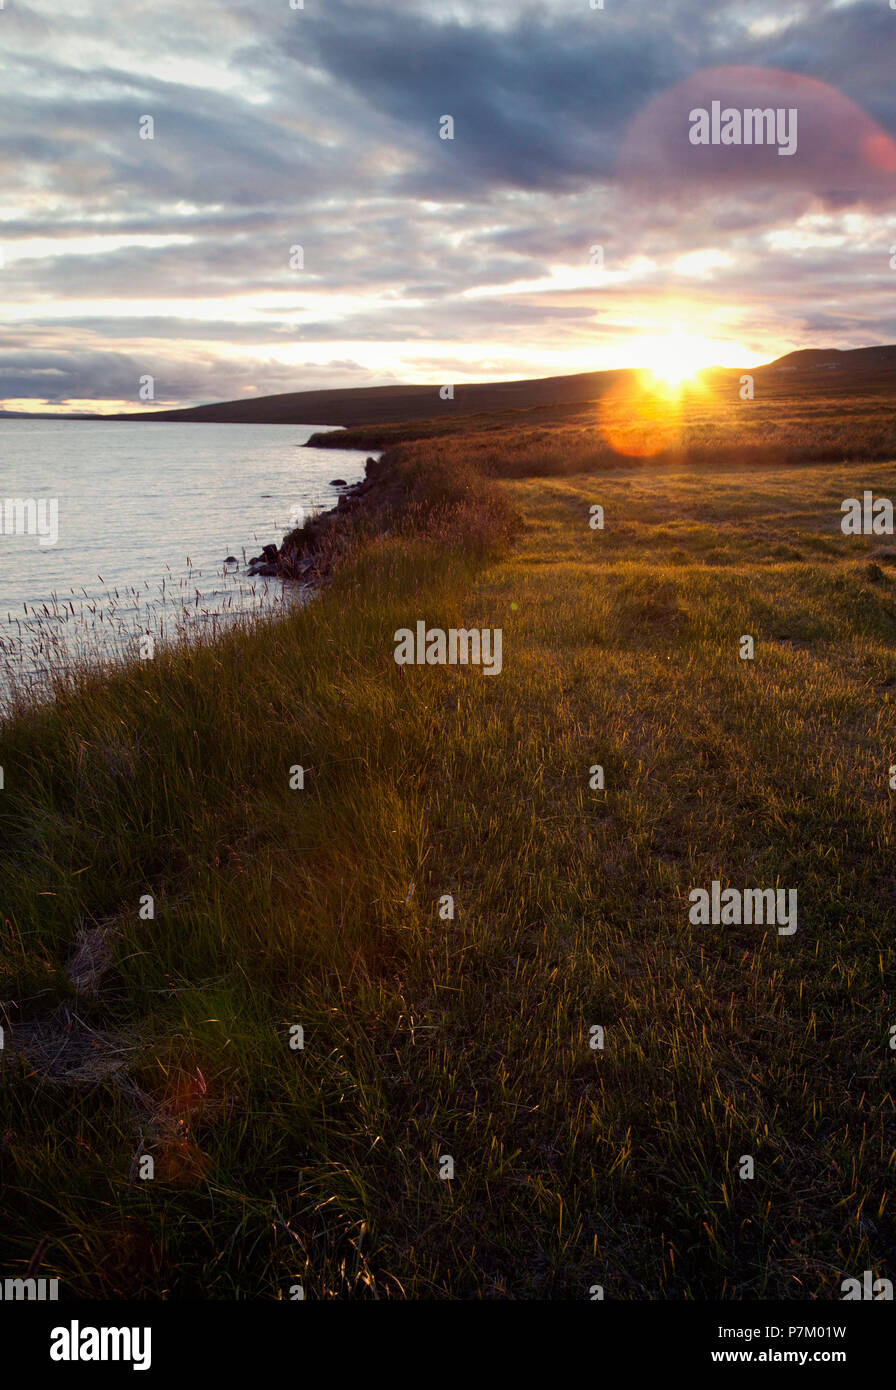 Hill, lake, Svinavatn, Iceland, landscape Stock Photo